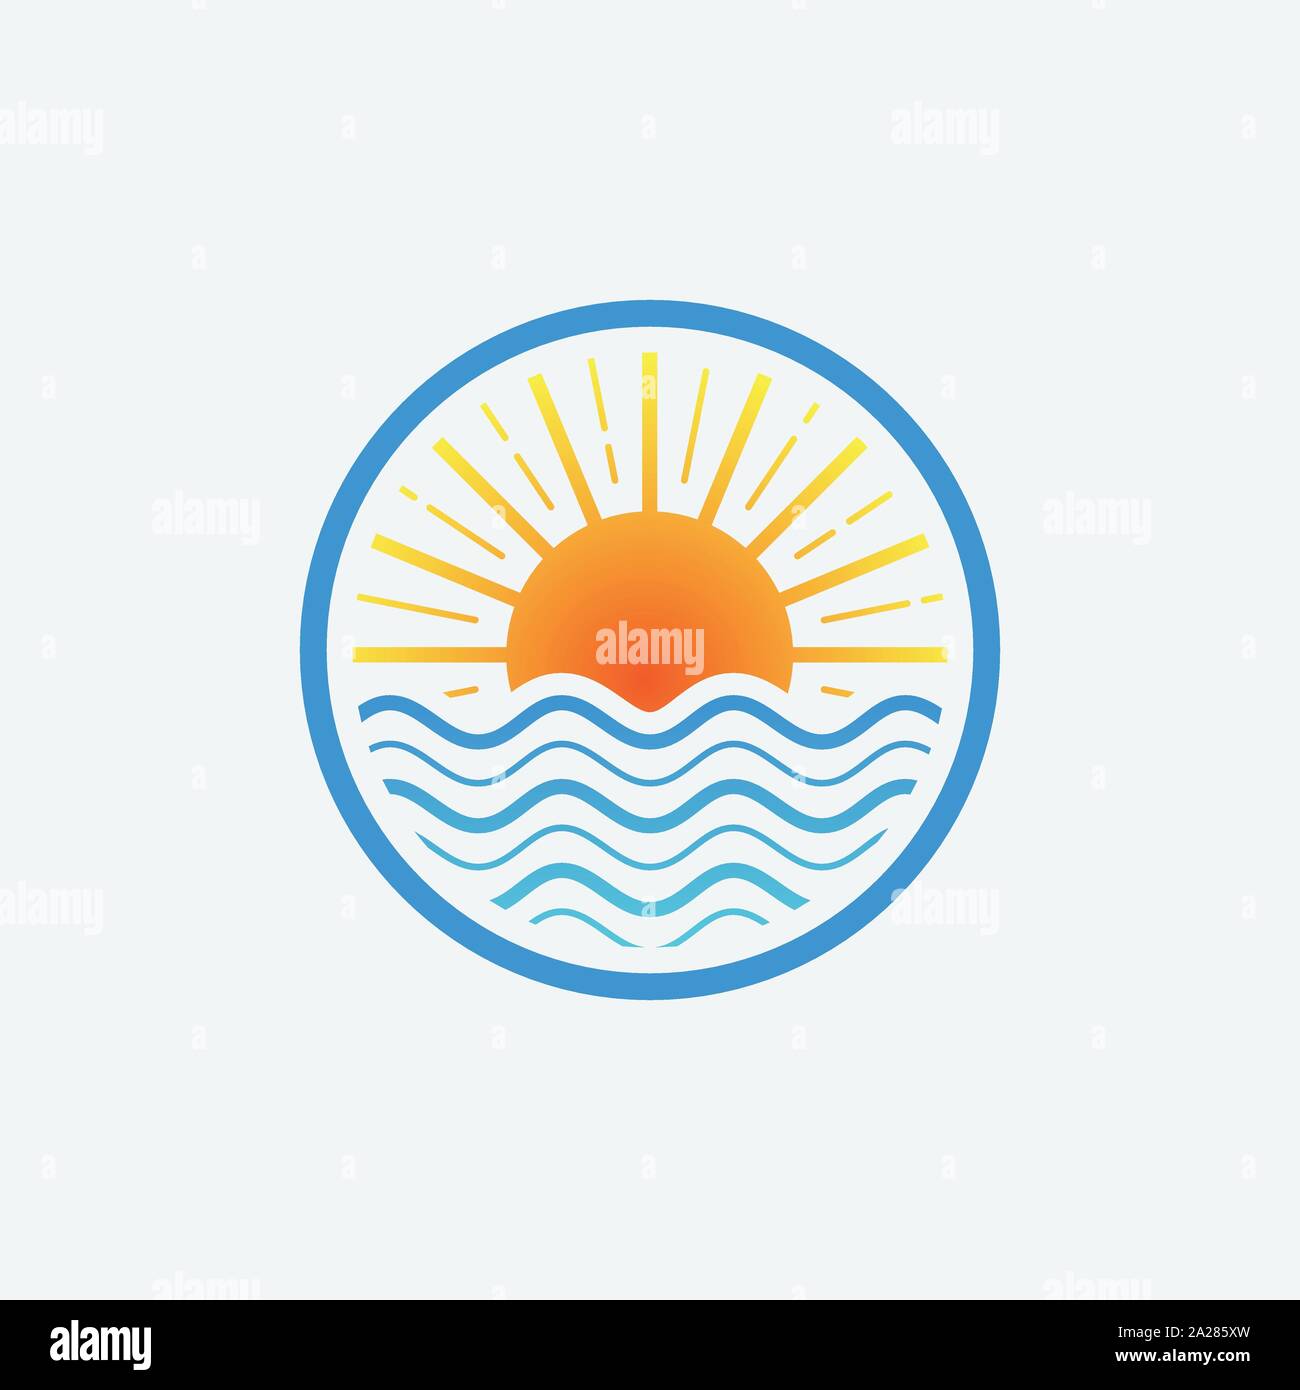 sea logo linear design template, sea and wafe circular logo icon illustration, sunset linear logo, beach icon symbol Stock Vector